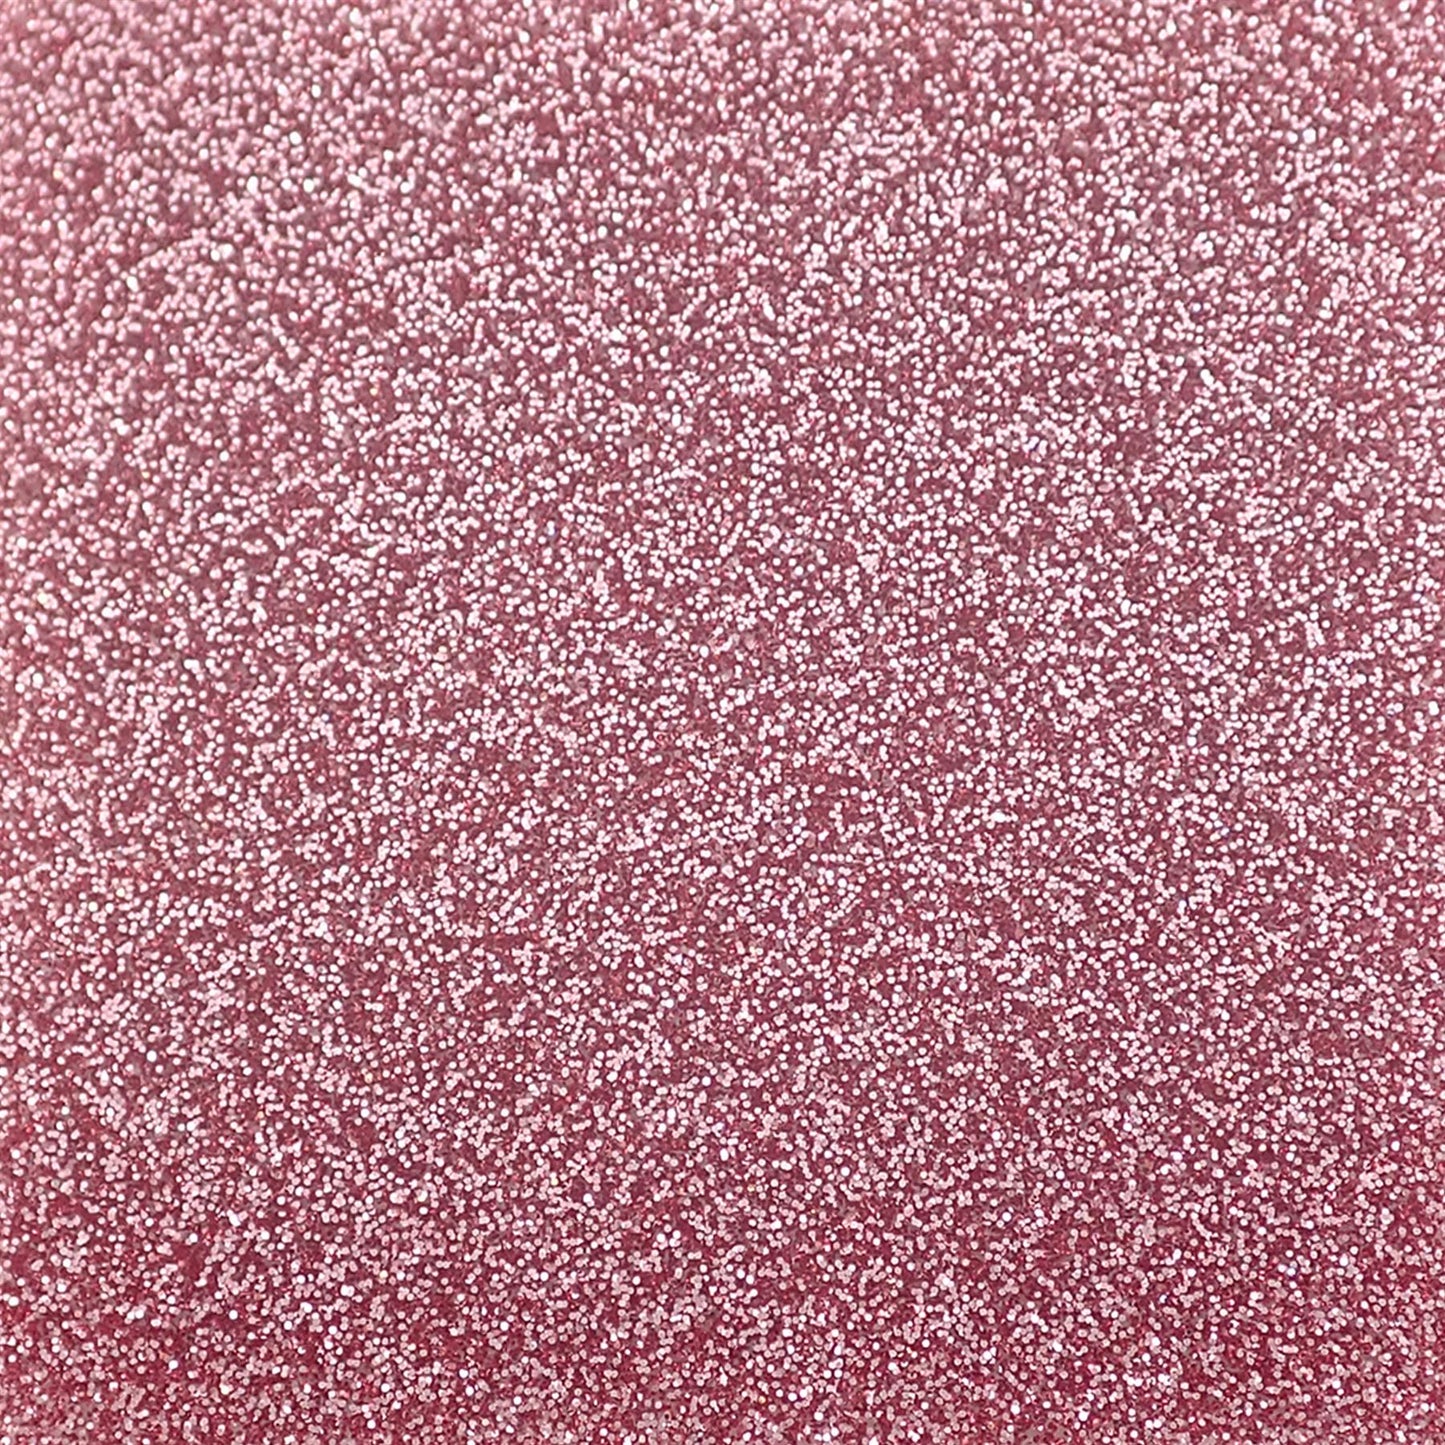 Incudo Pink Gold 2-Sided Glitter Acrylic Sheet - 300x200x3mm (11.8x7.87x0.12")